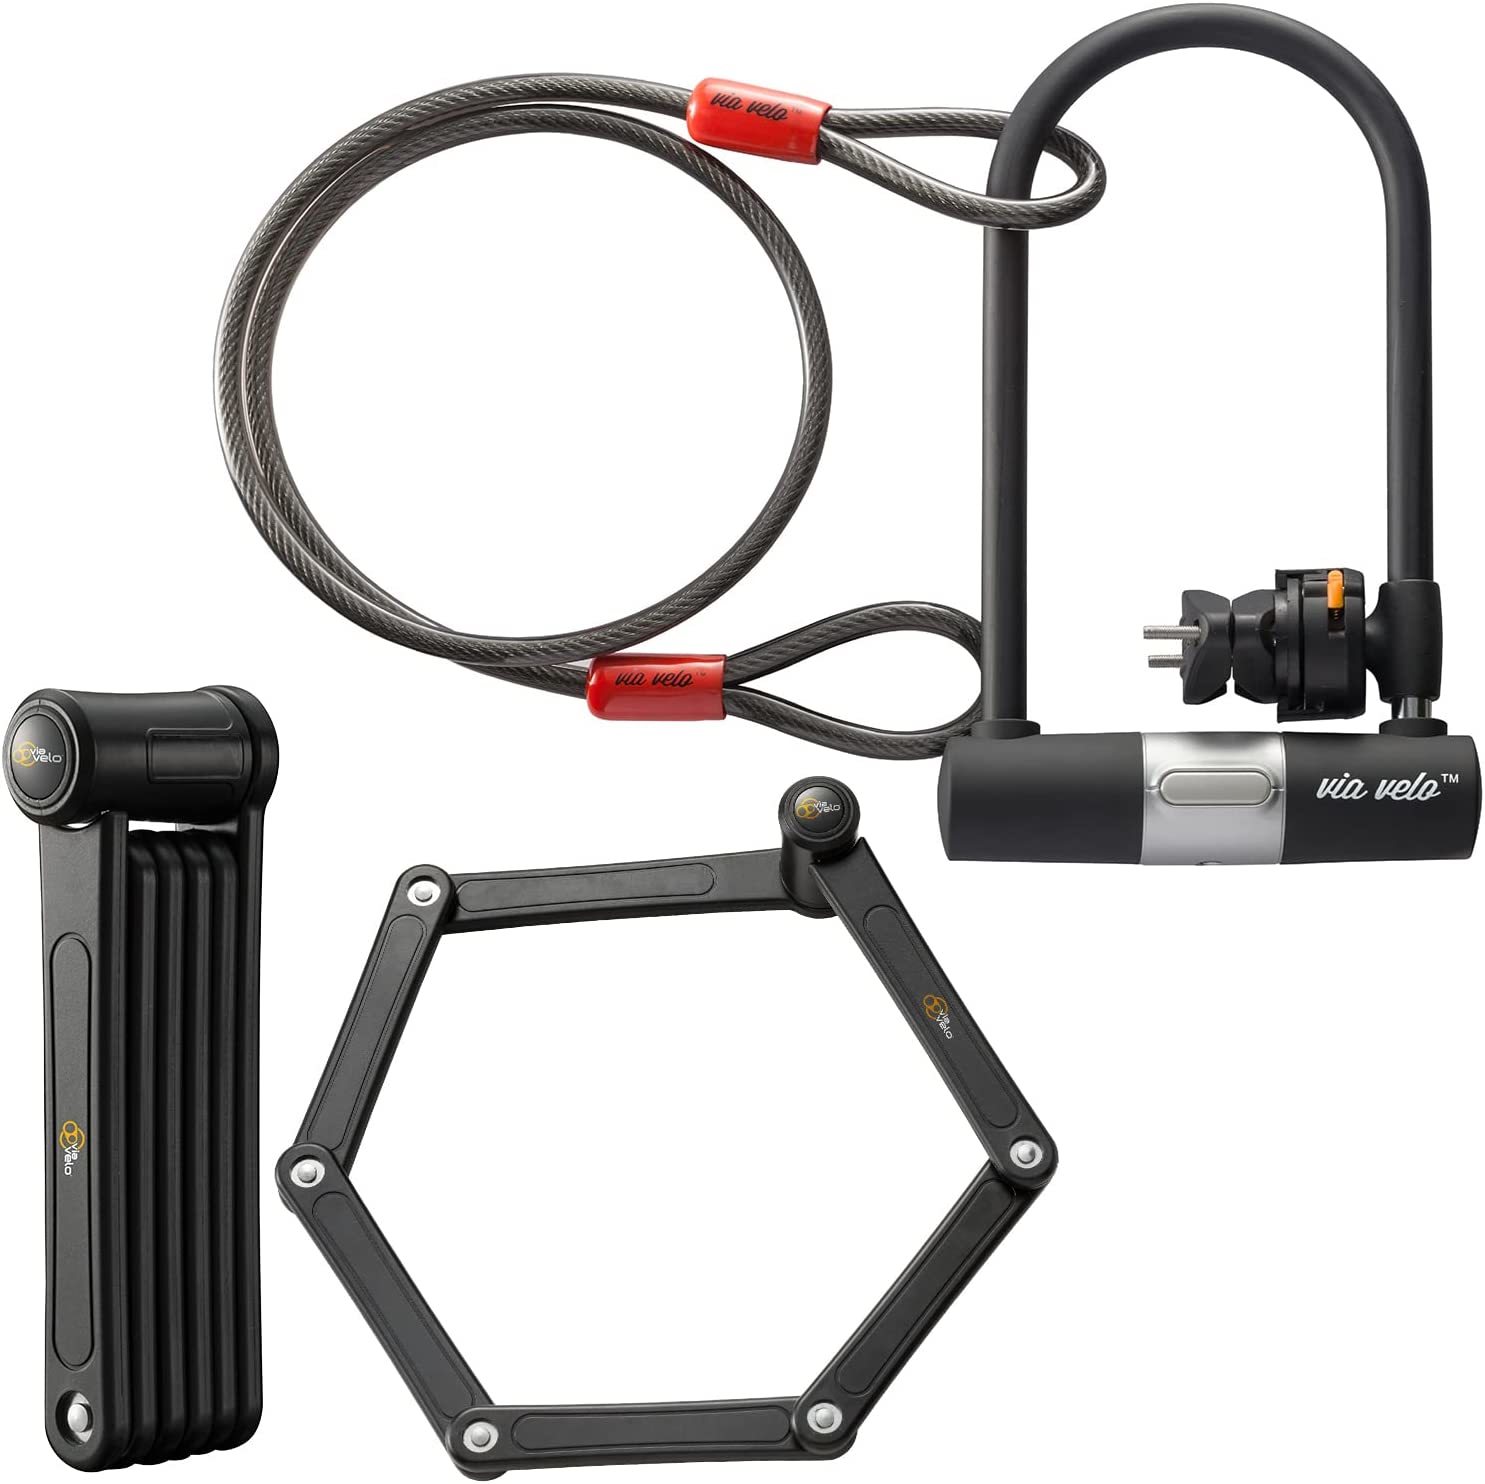 Electric Bike Bike Lock Set Triple Protection Via Velo 2022 New Heavy-Duty Hard - $83.99